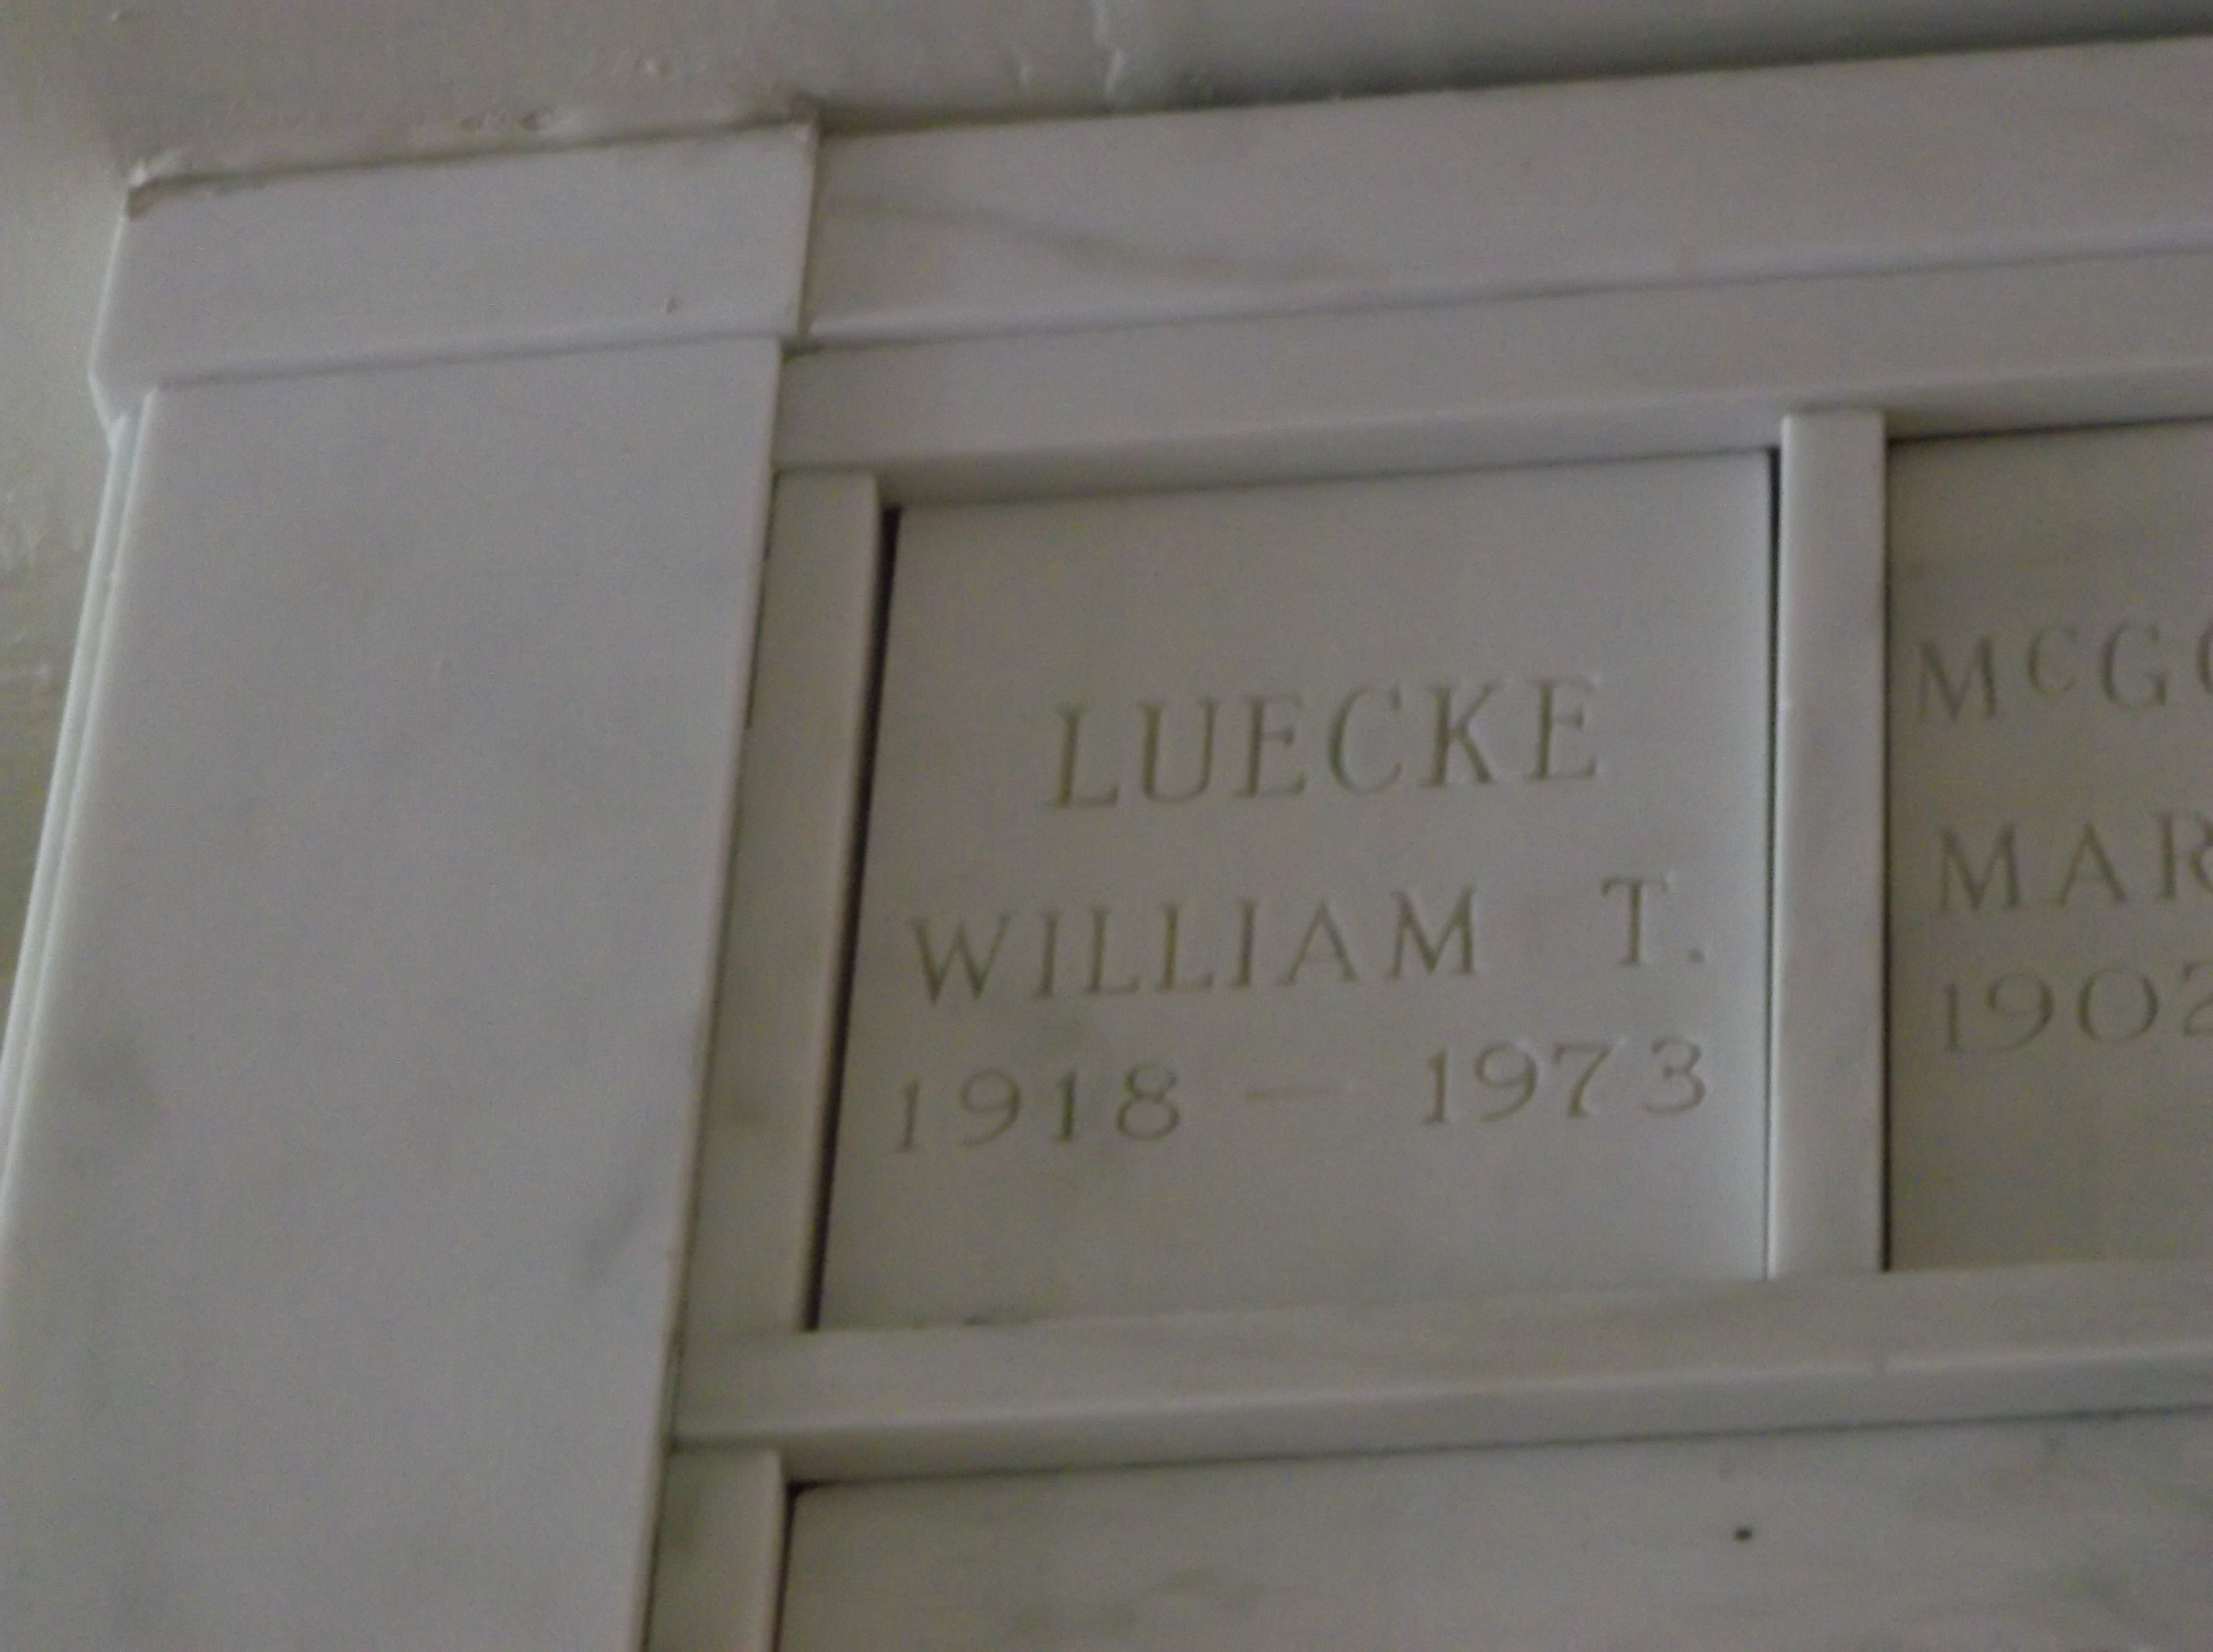 William T Luecke